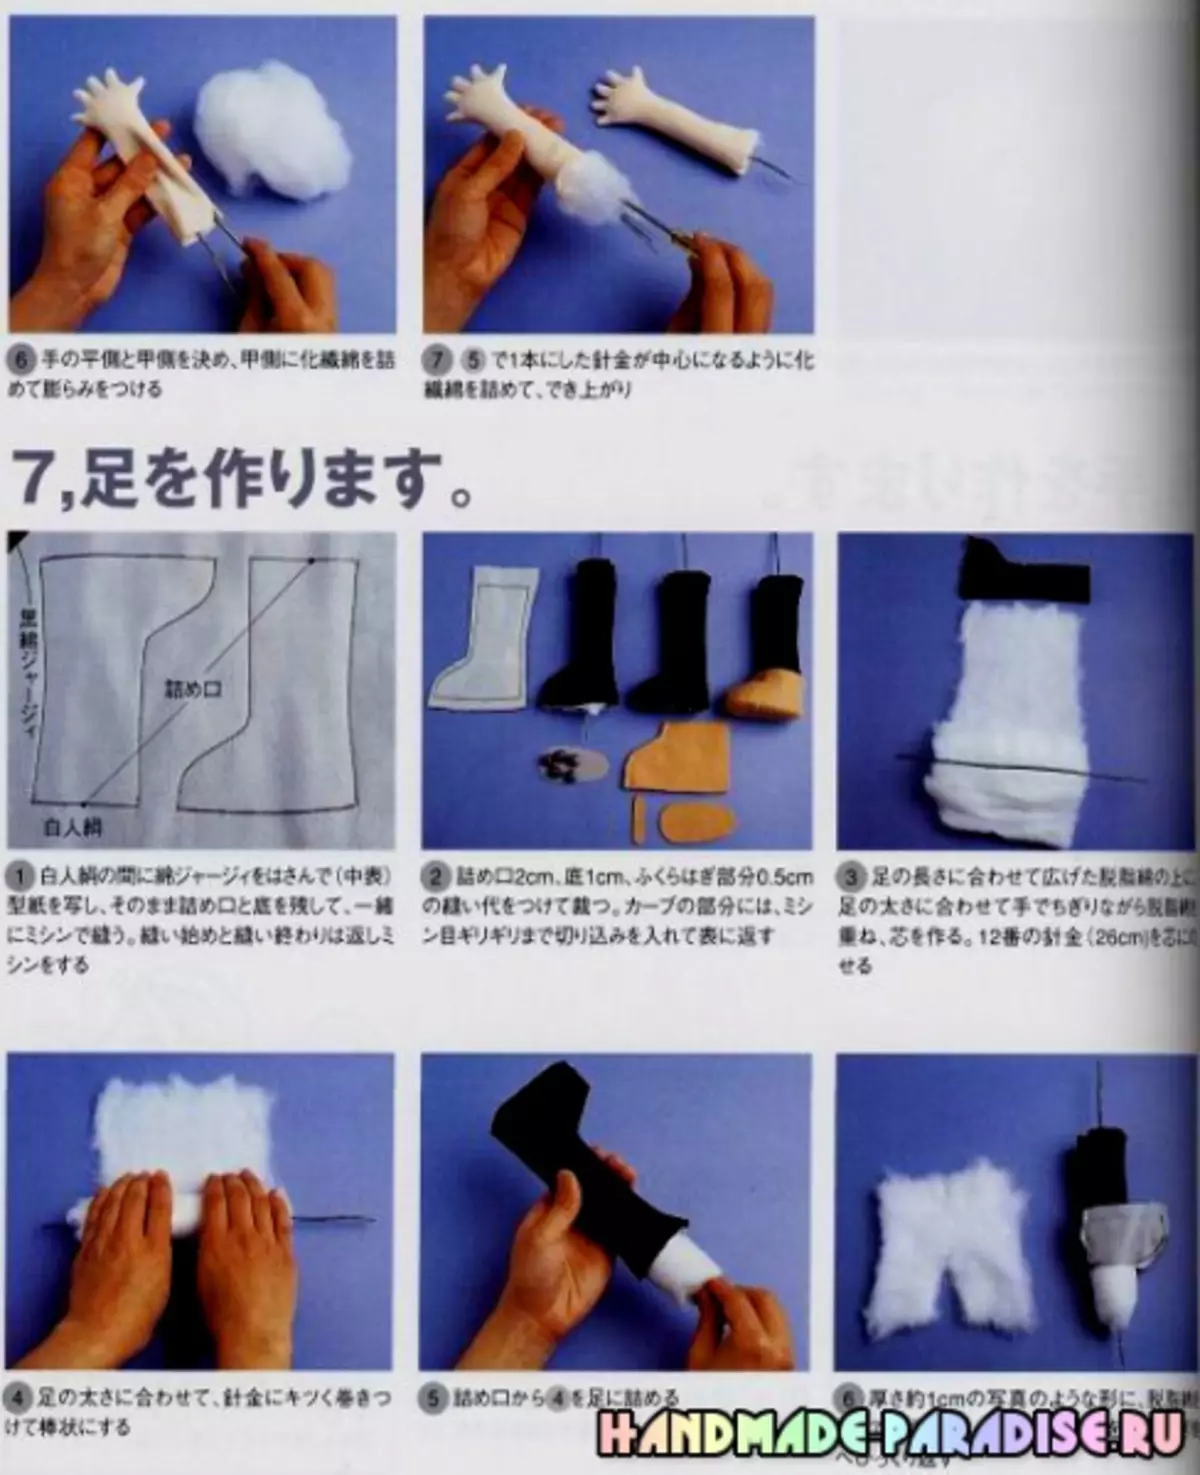 Come cucire una bambola giapponese Kyoko Yoneyama